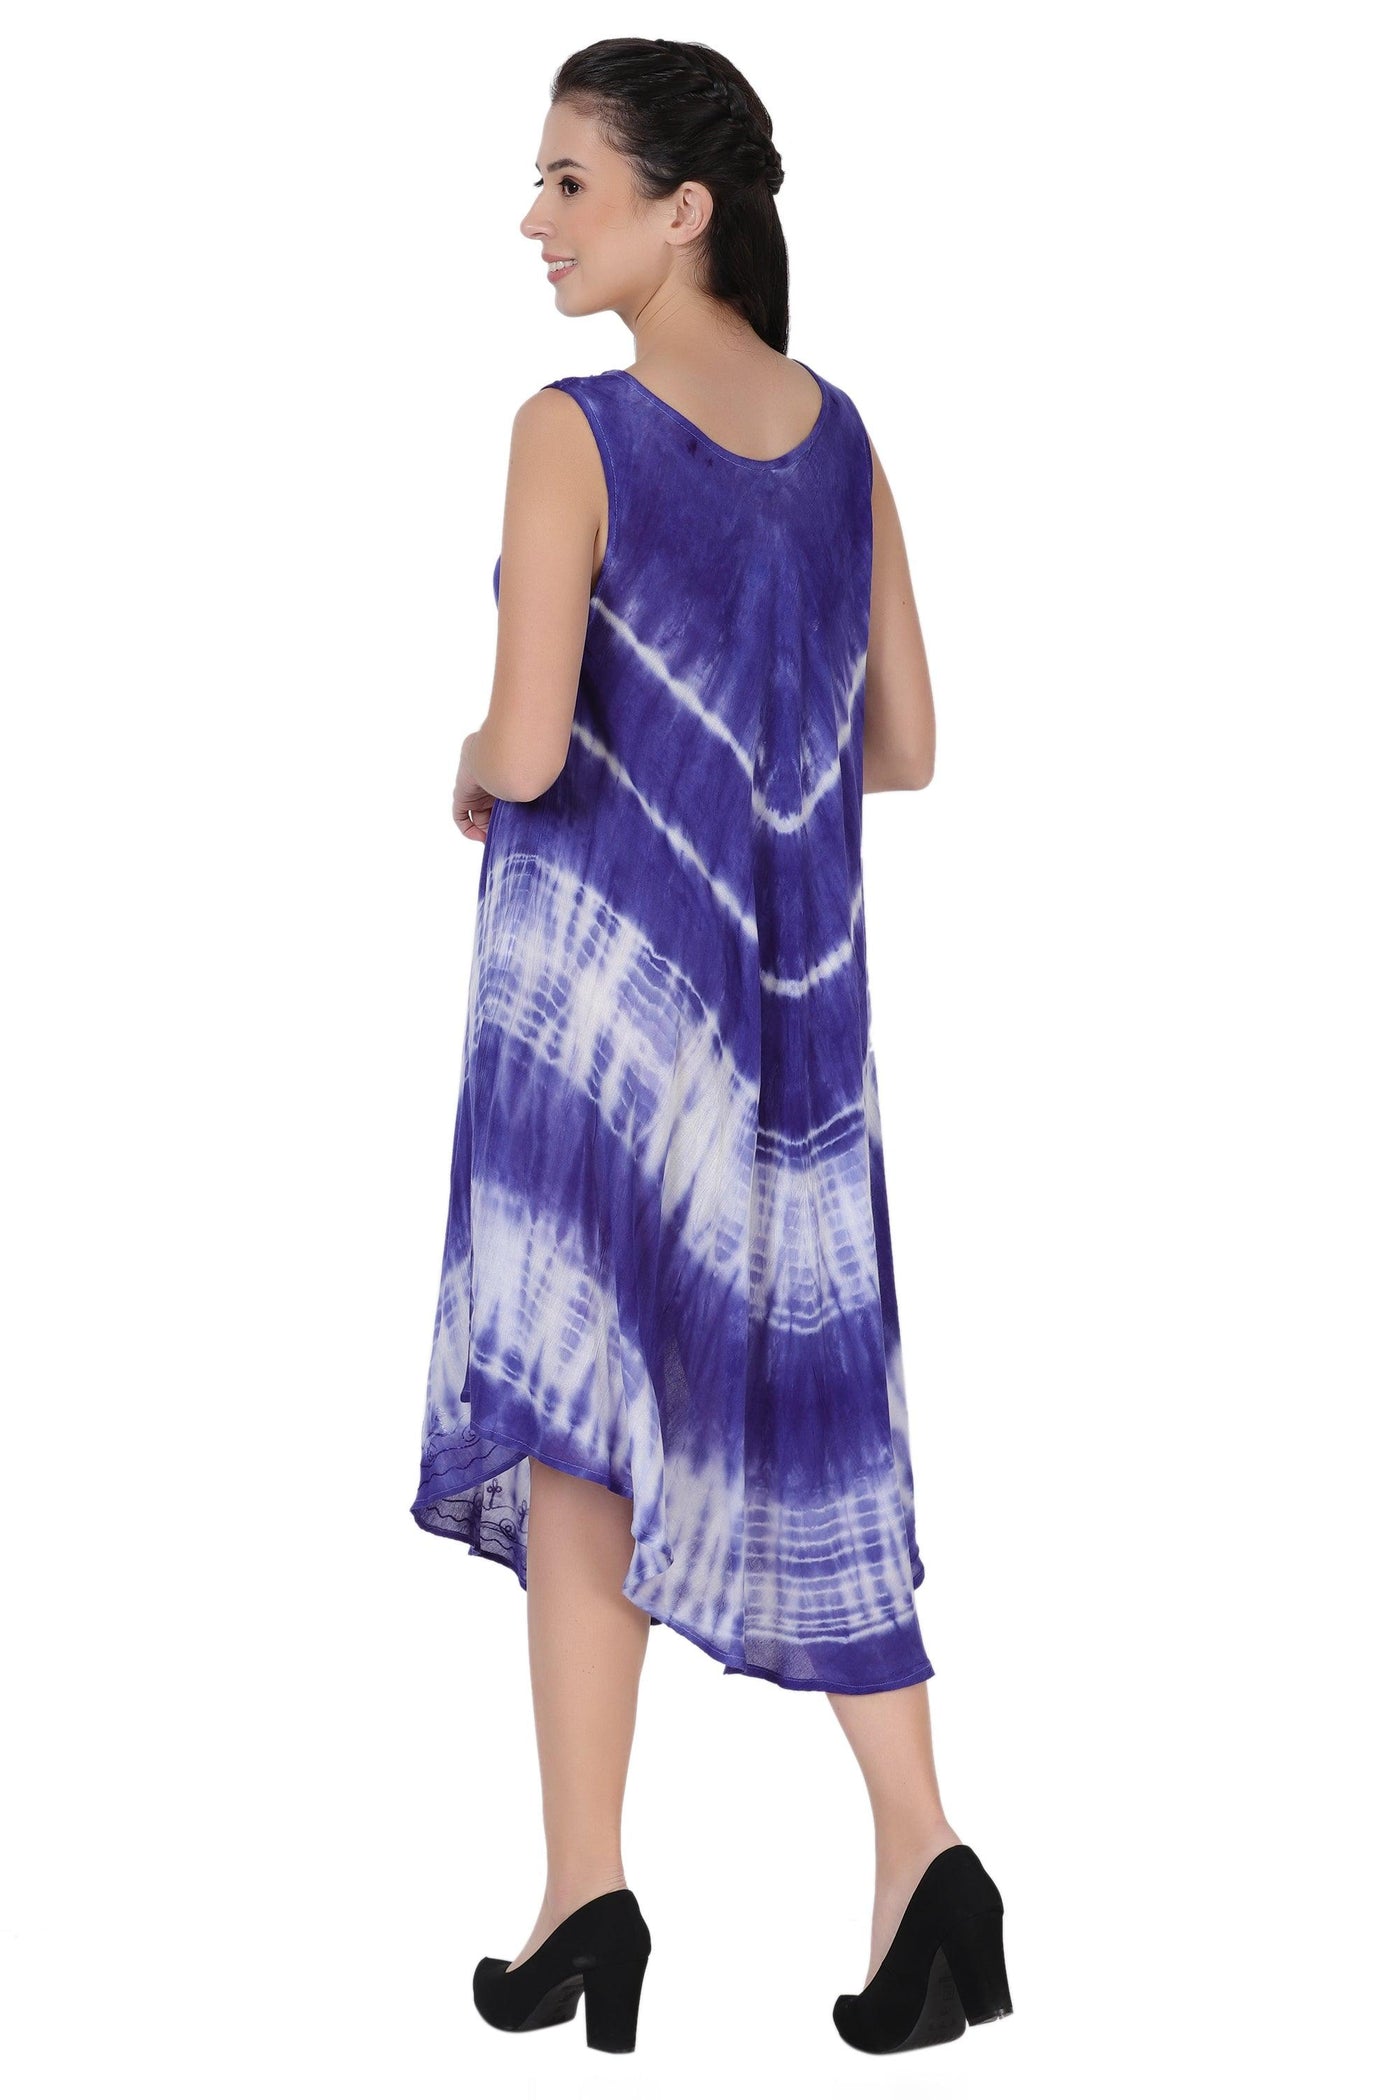 Sleeveless Tie Dye Long Umbrella Dress 482122  - Advance Apparels Inc